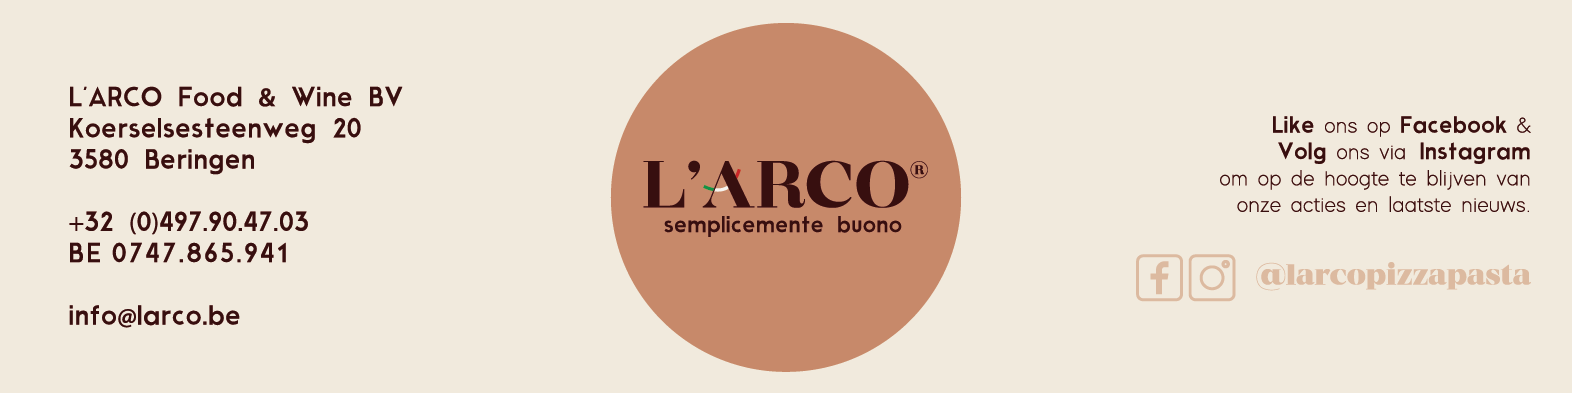 L'ARCO Banner